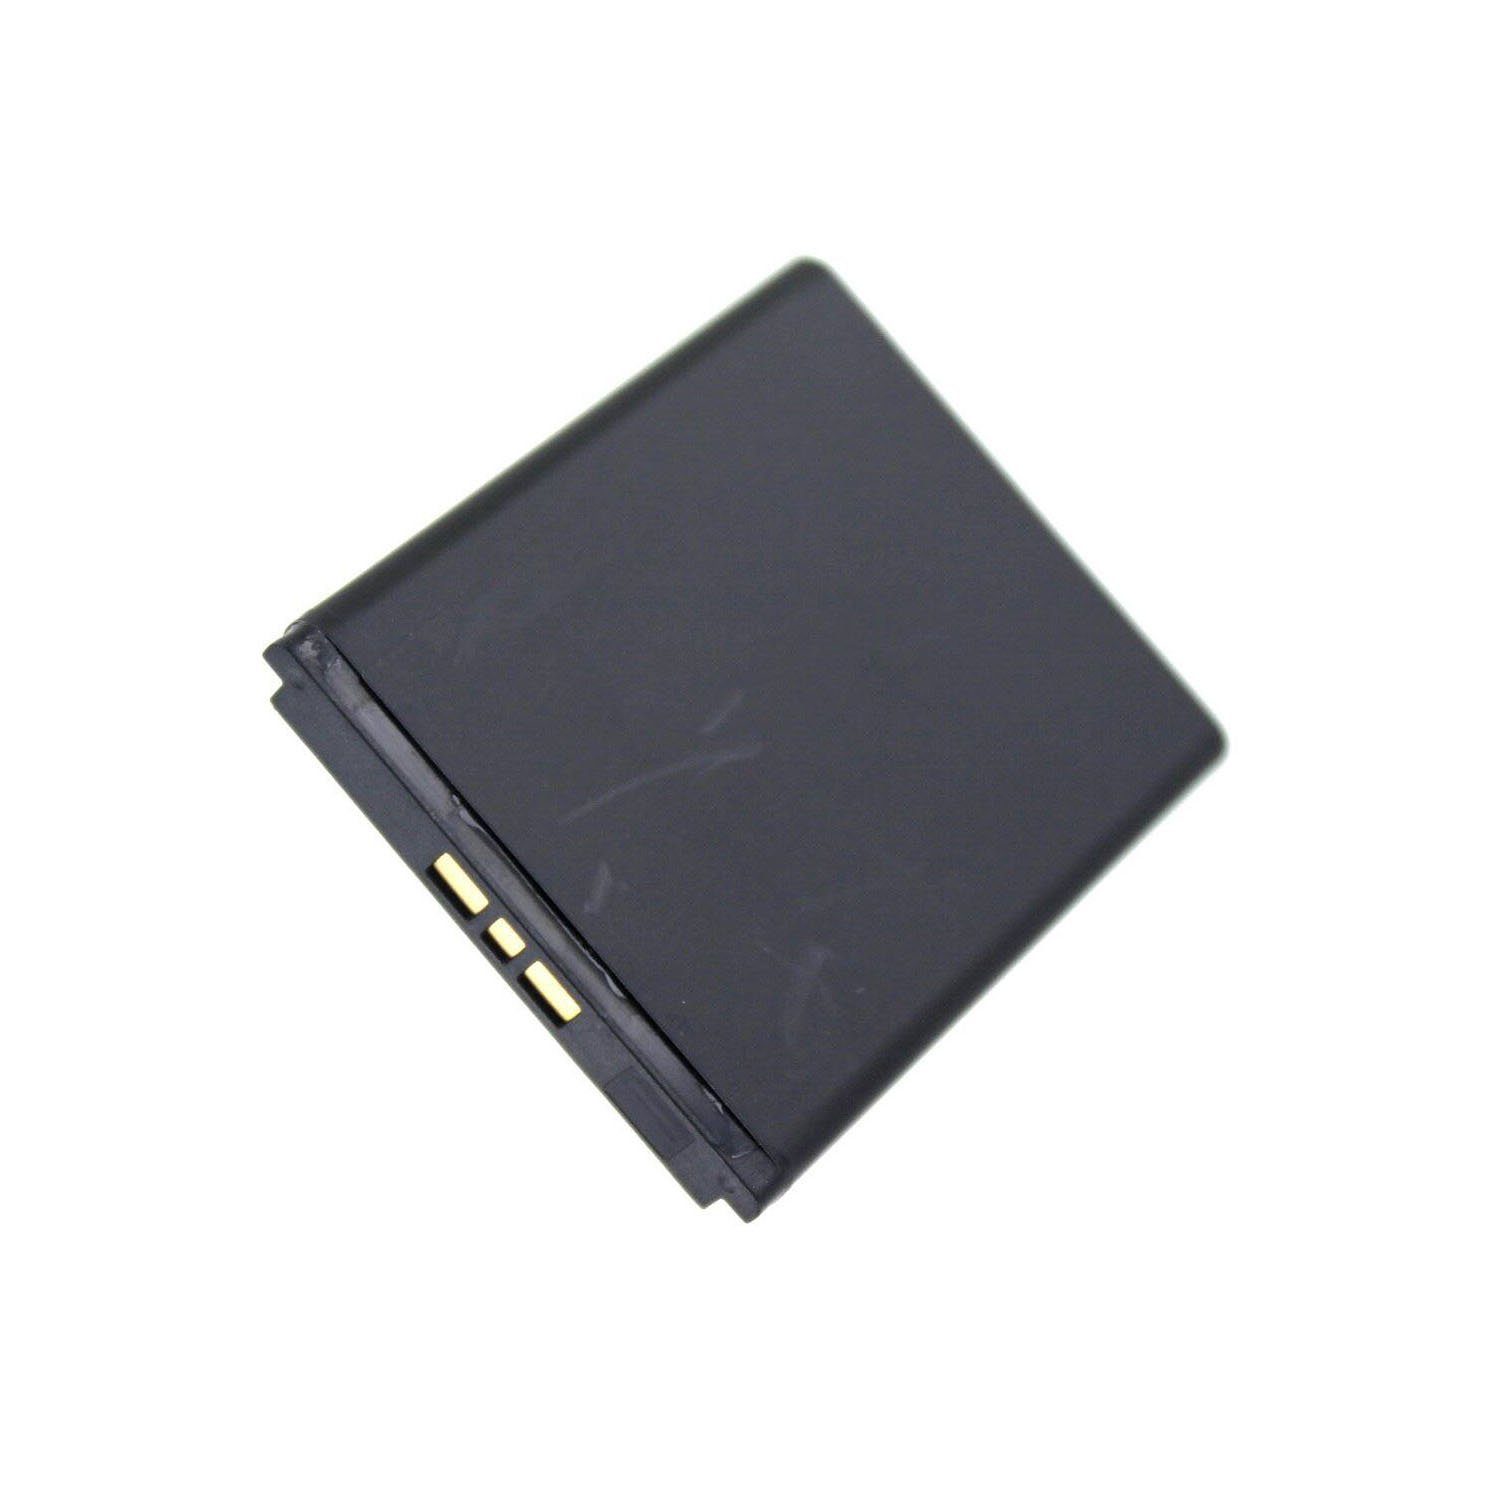 AGI Akku kompatibel mit Sony Ericsson W715 Akku Akku